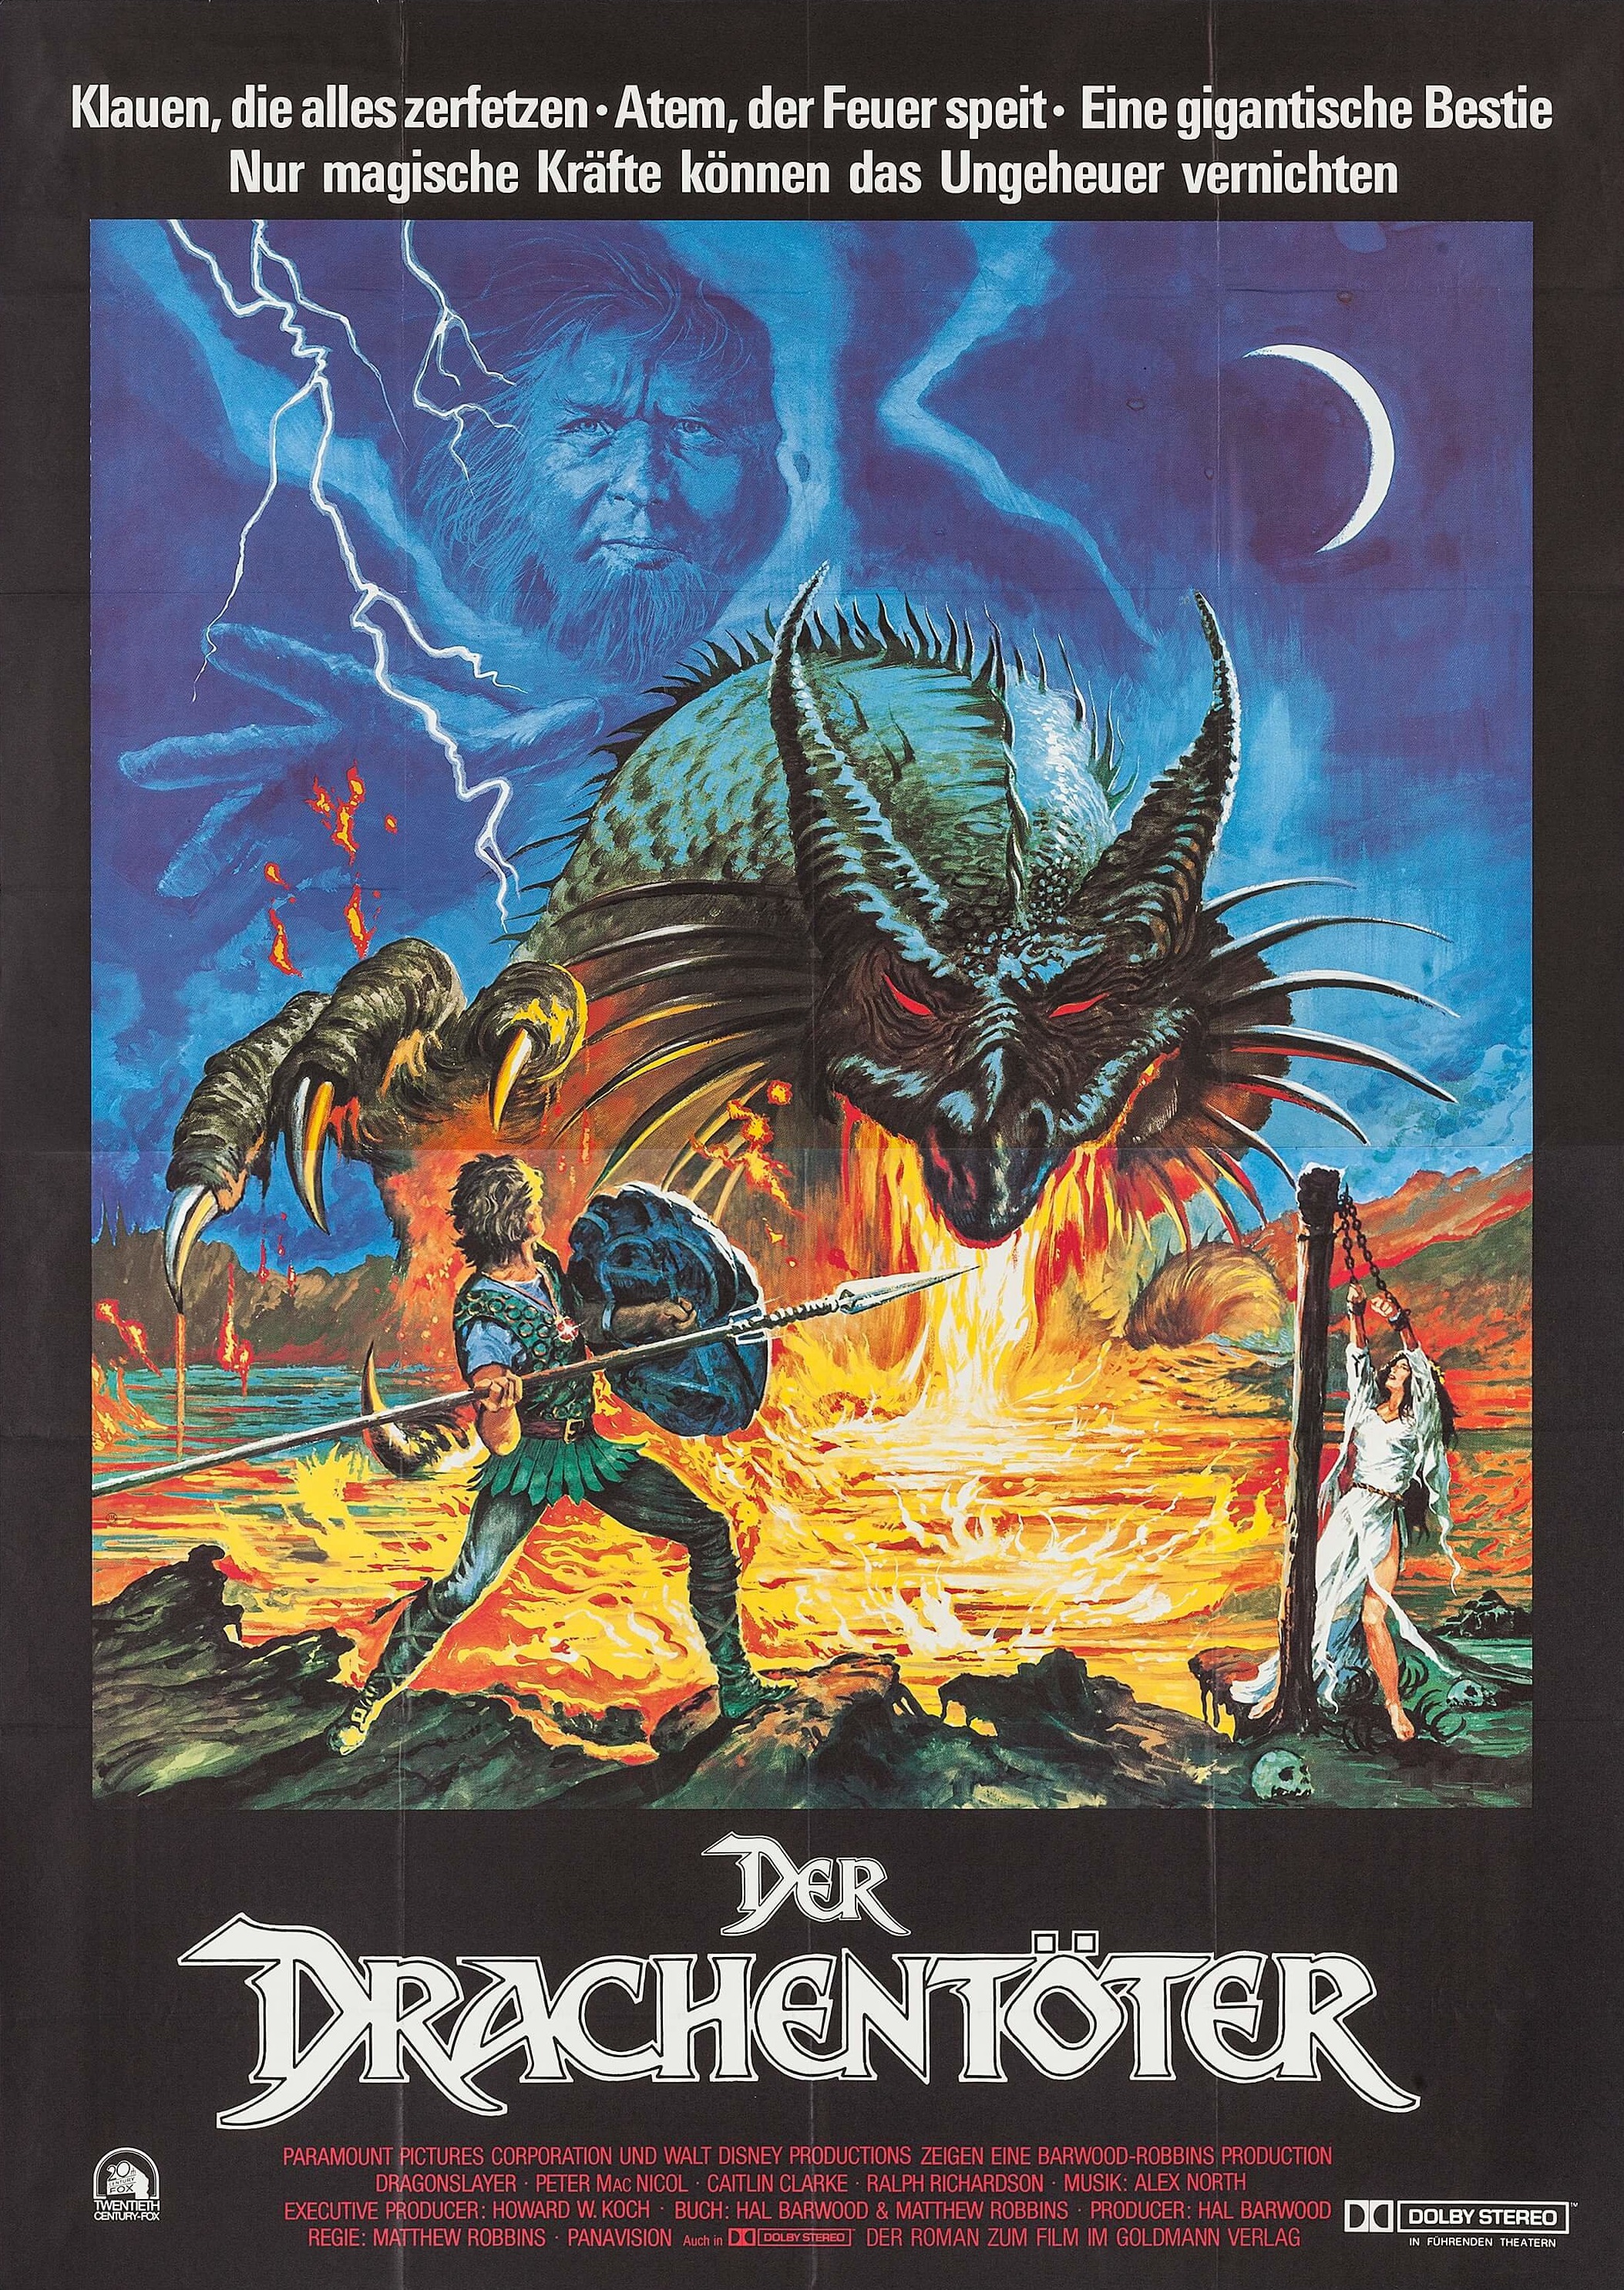 Mega Sized Movie Poster Image for Dragonslayer (#5 of 5)